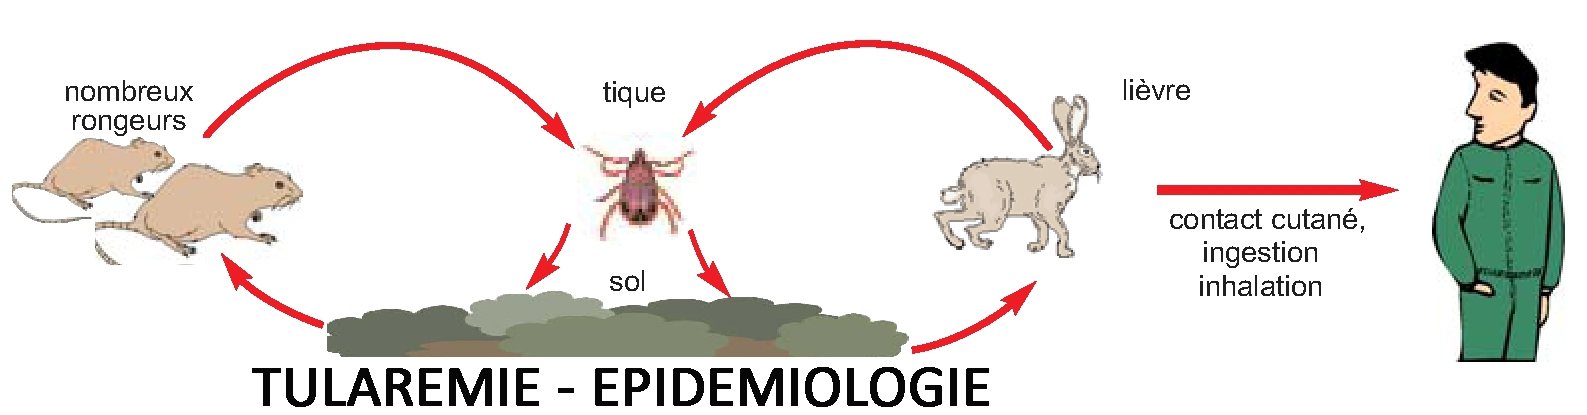 tularemie-epidemiologie